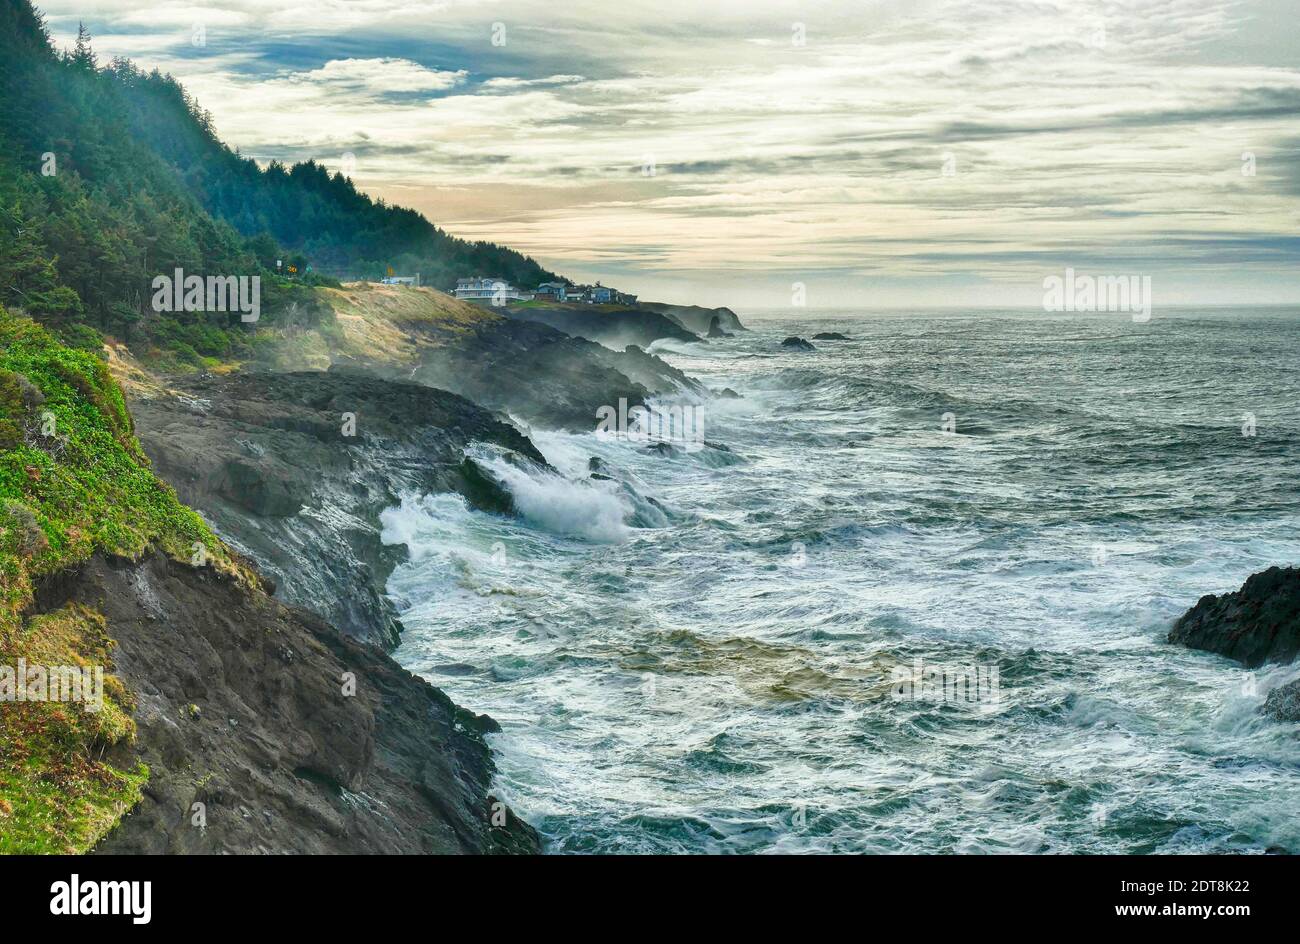 Heavy seas crash on rocks off the Otter Crest Loop, Oregon coast Stock Photo